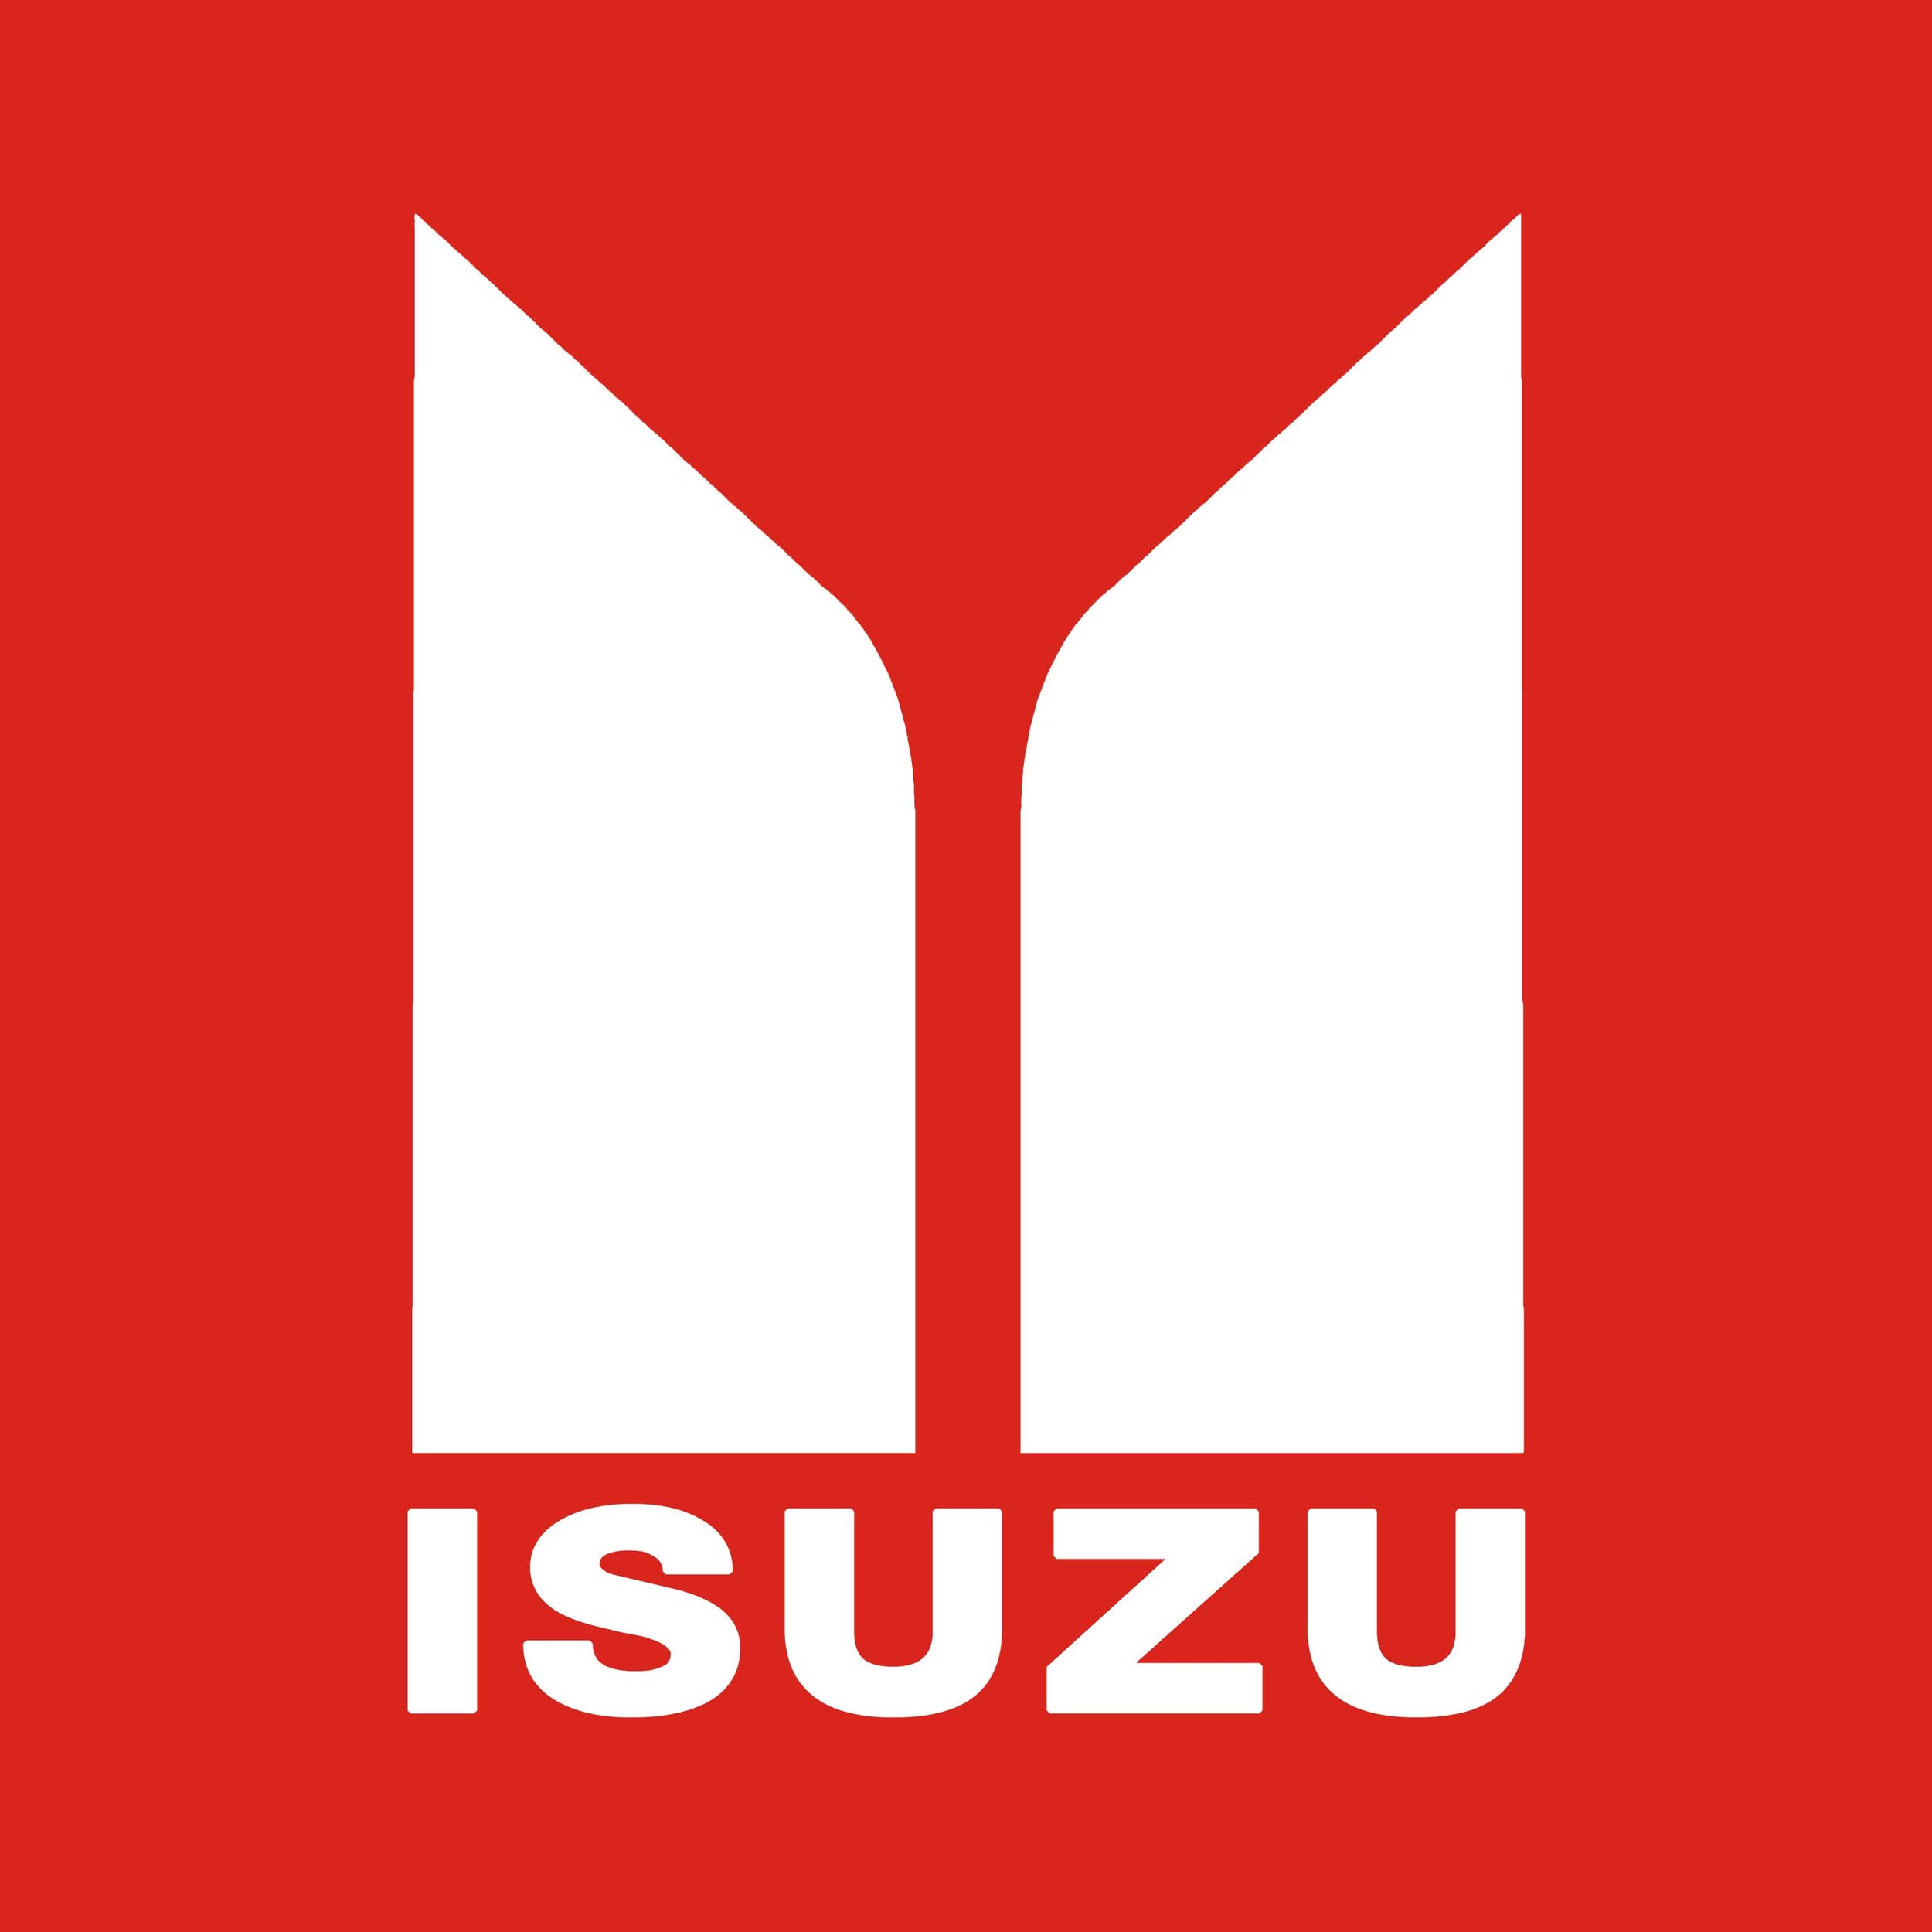 Isuzu-logo-1974-3000x3000.jpg